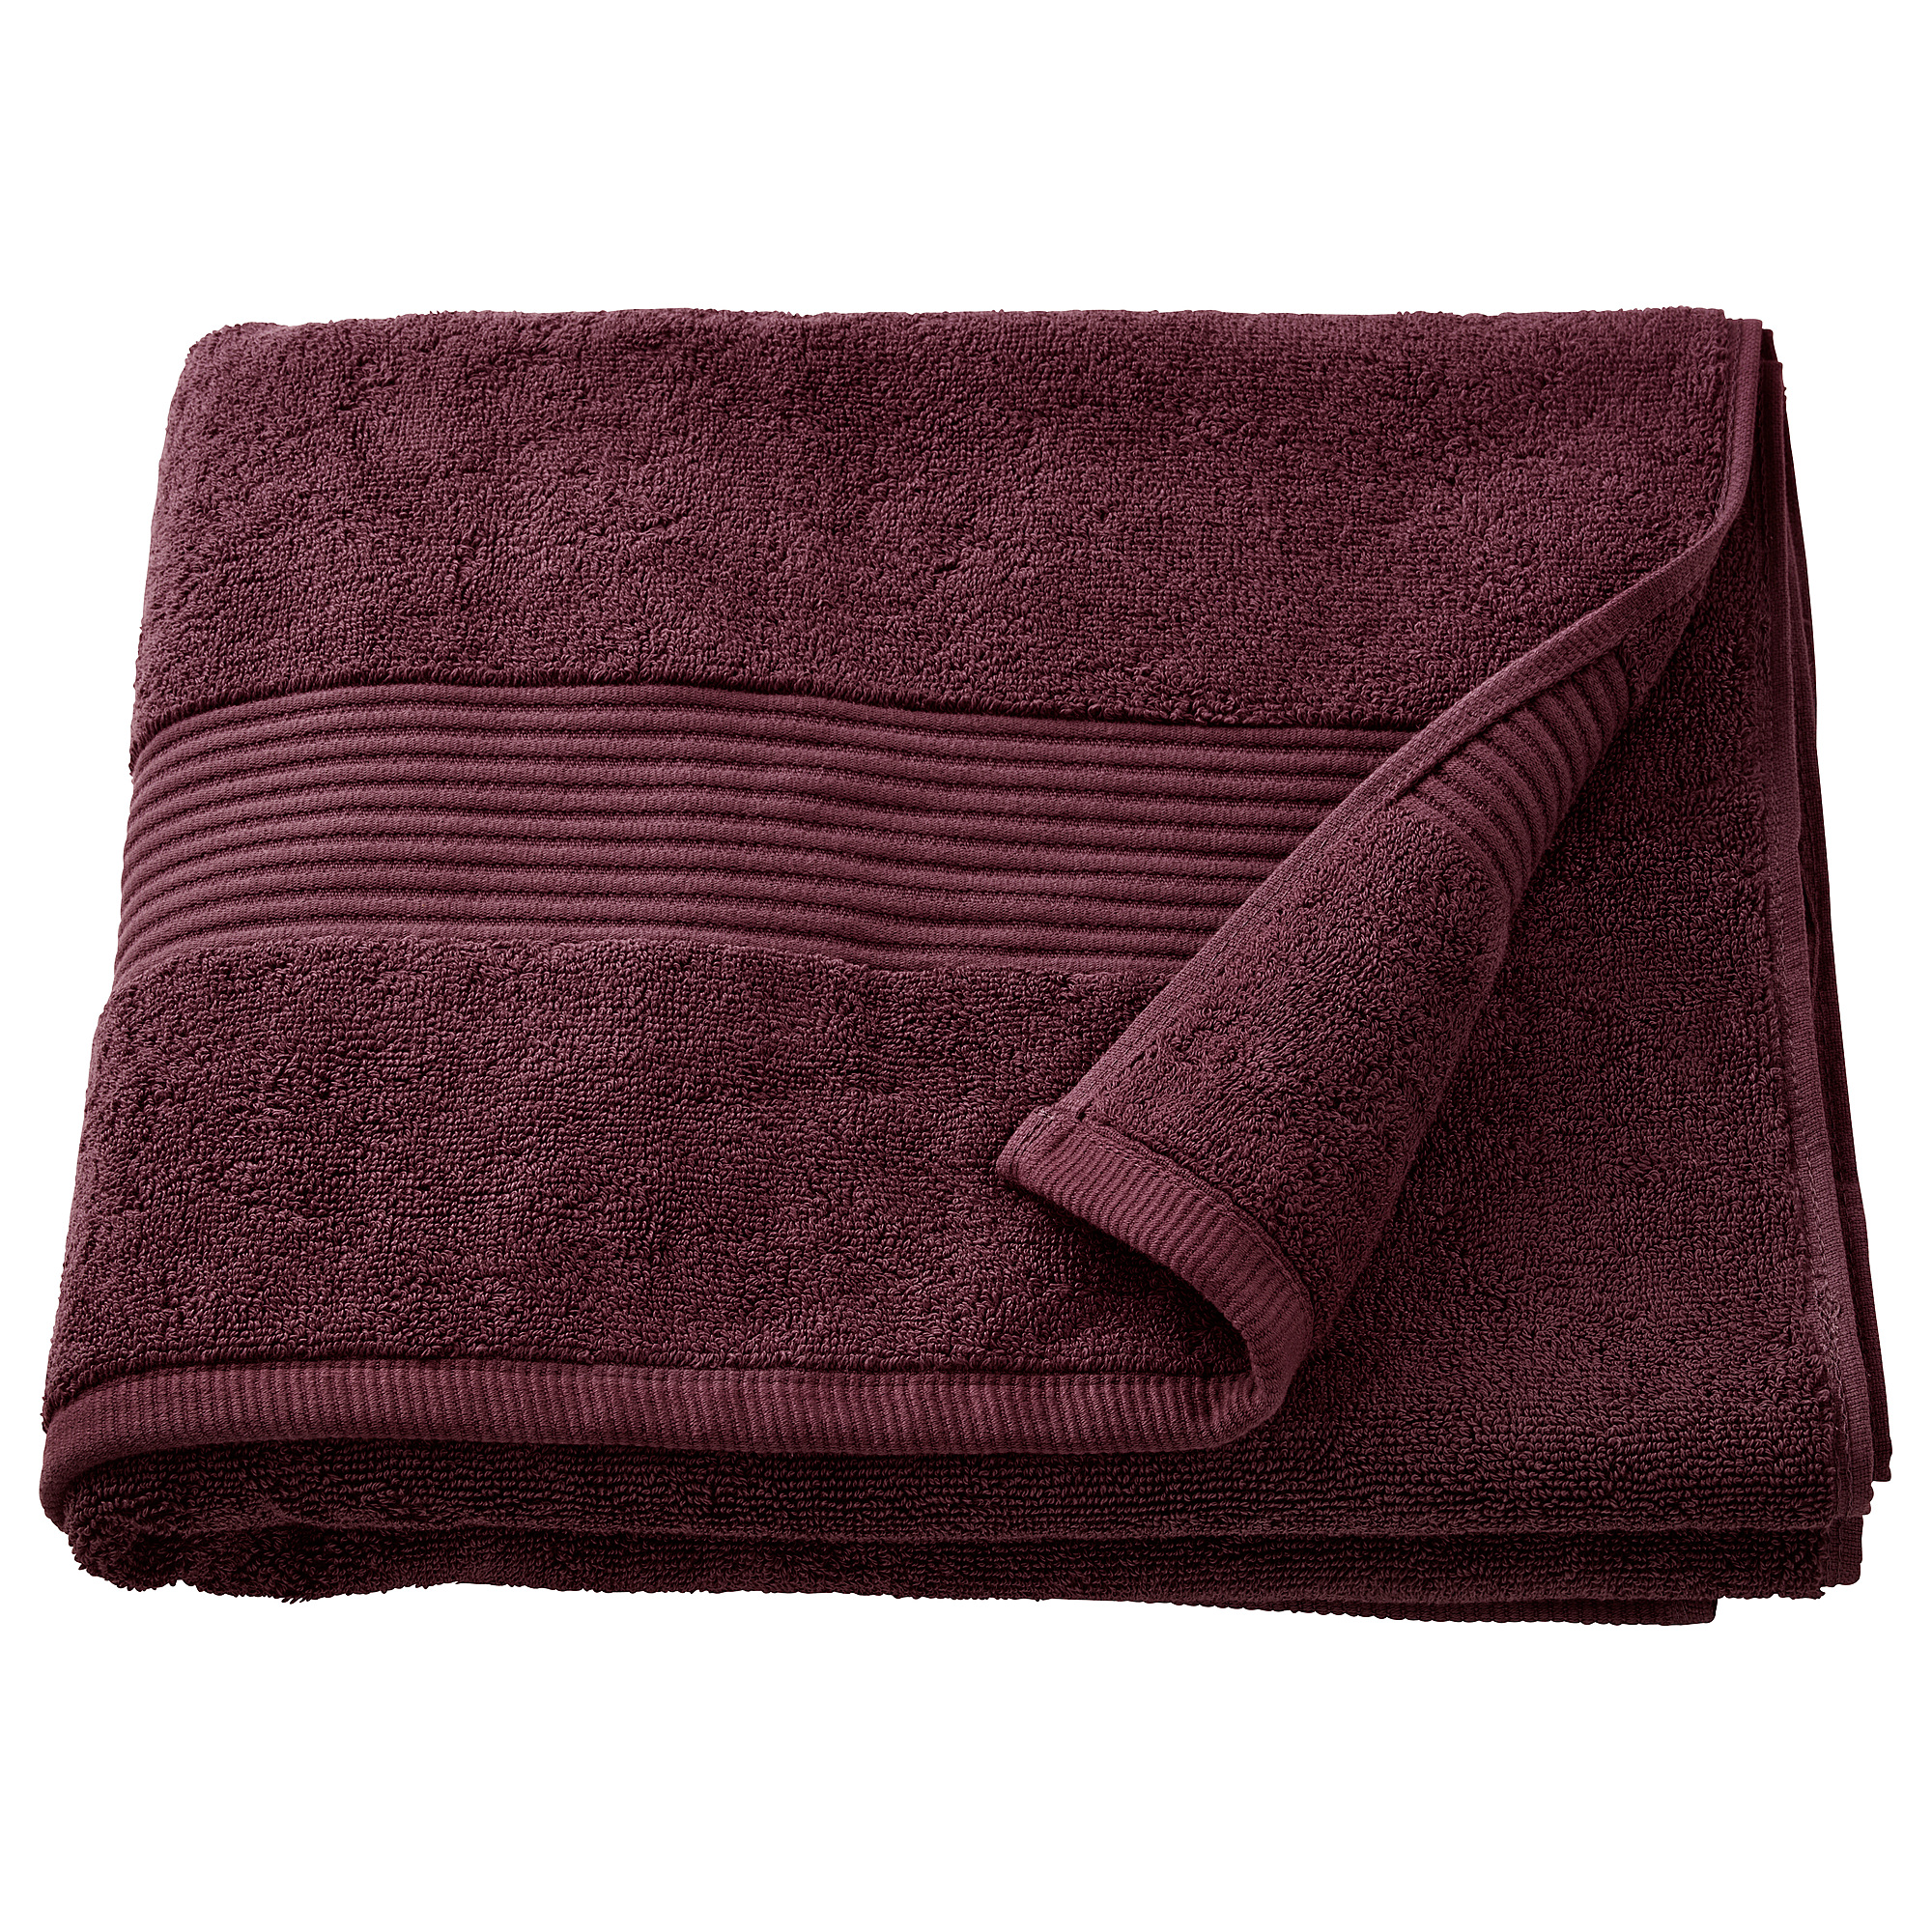 FREDRIKSJÖN bath towel